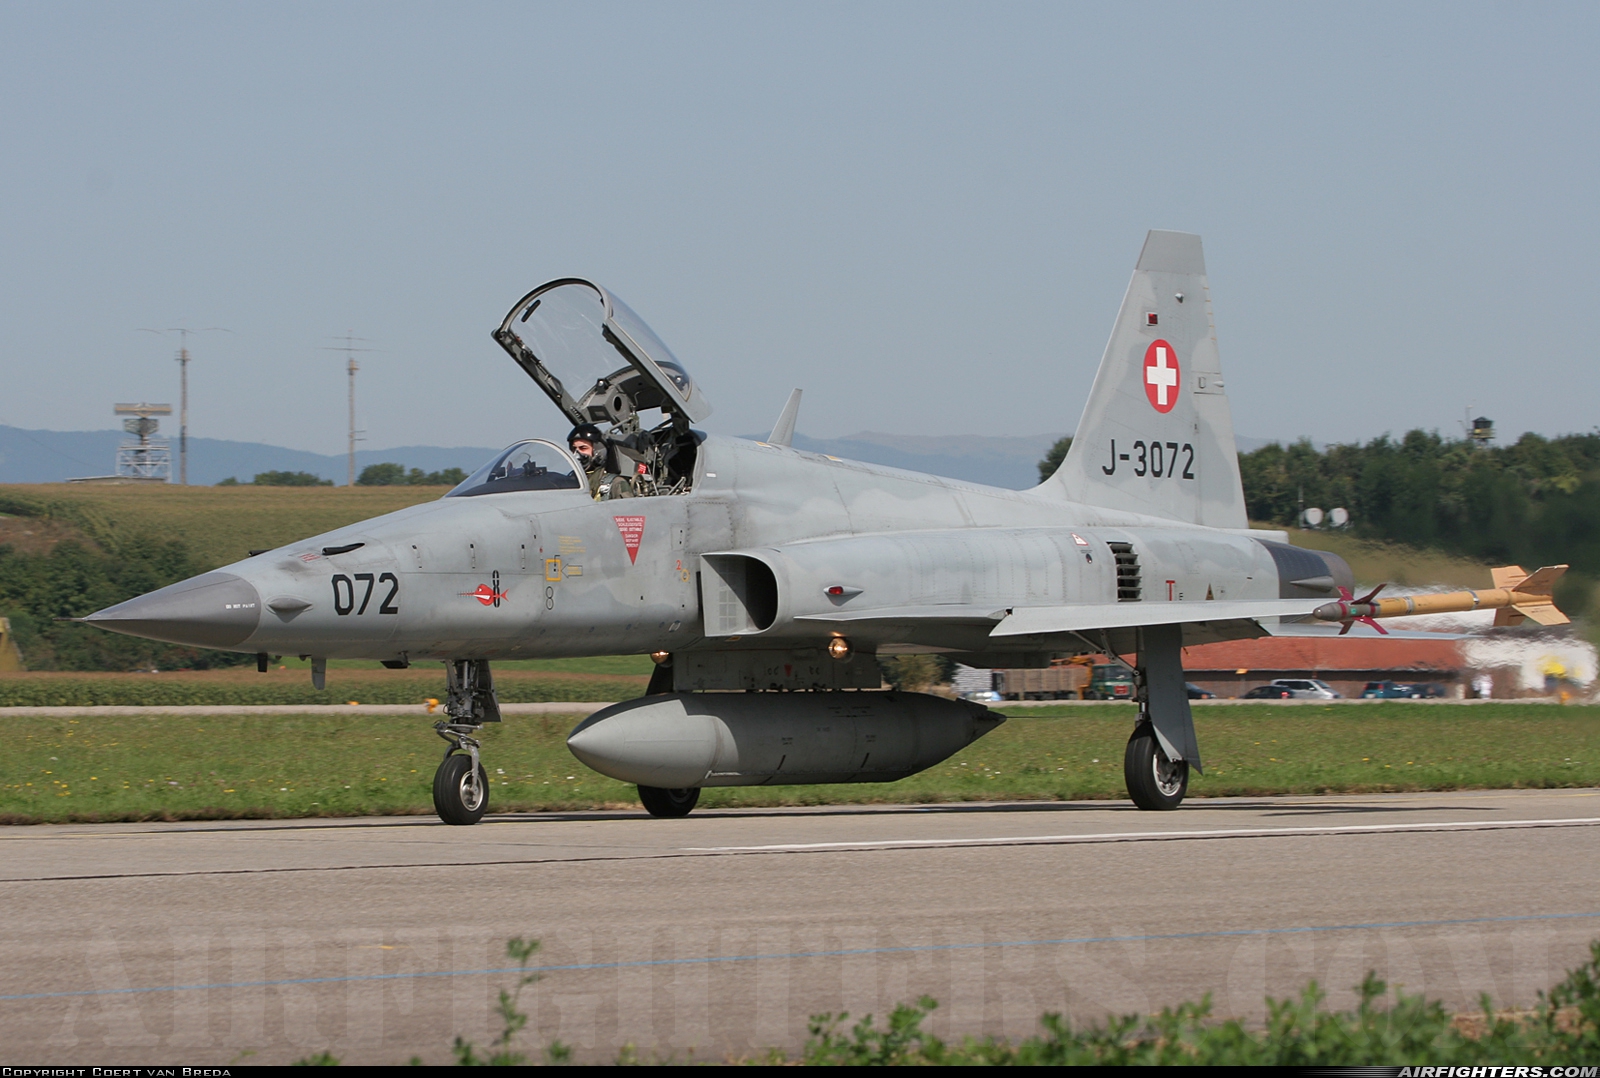 Switzerland - Air Force Northrop F-5E Tiger II J-3072 at Payerne (LSMP), Switzerland